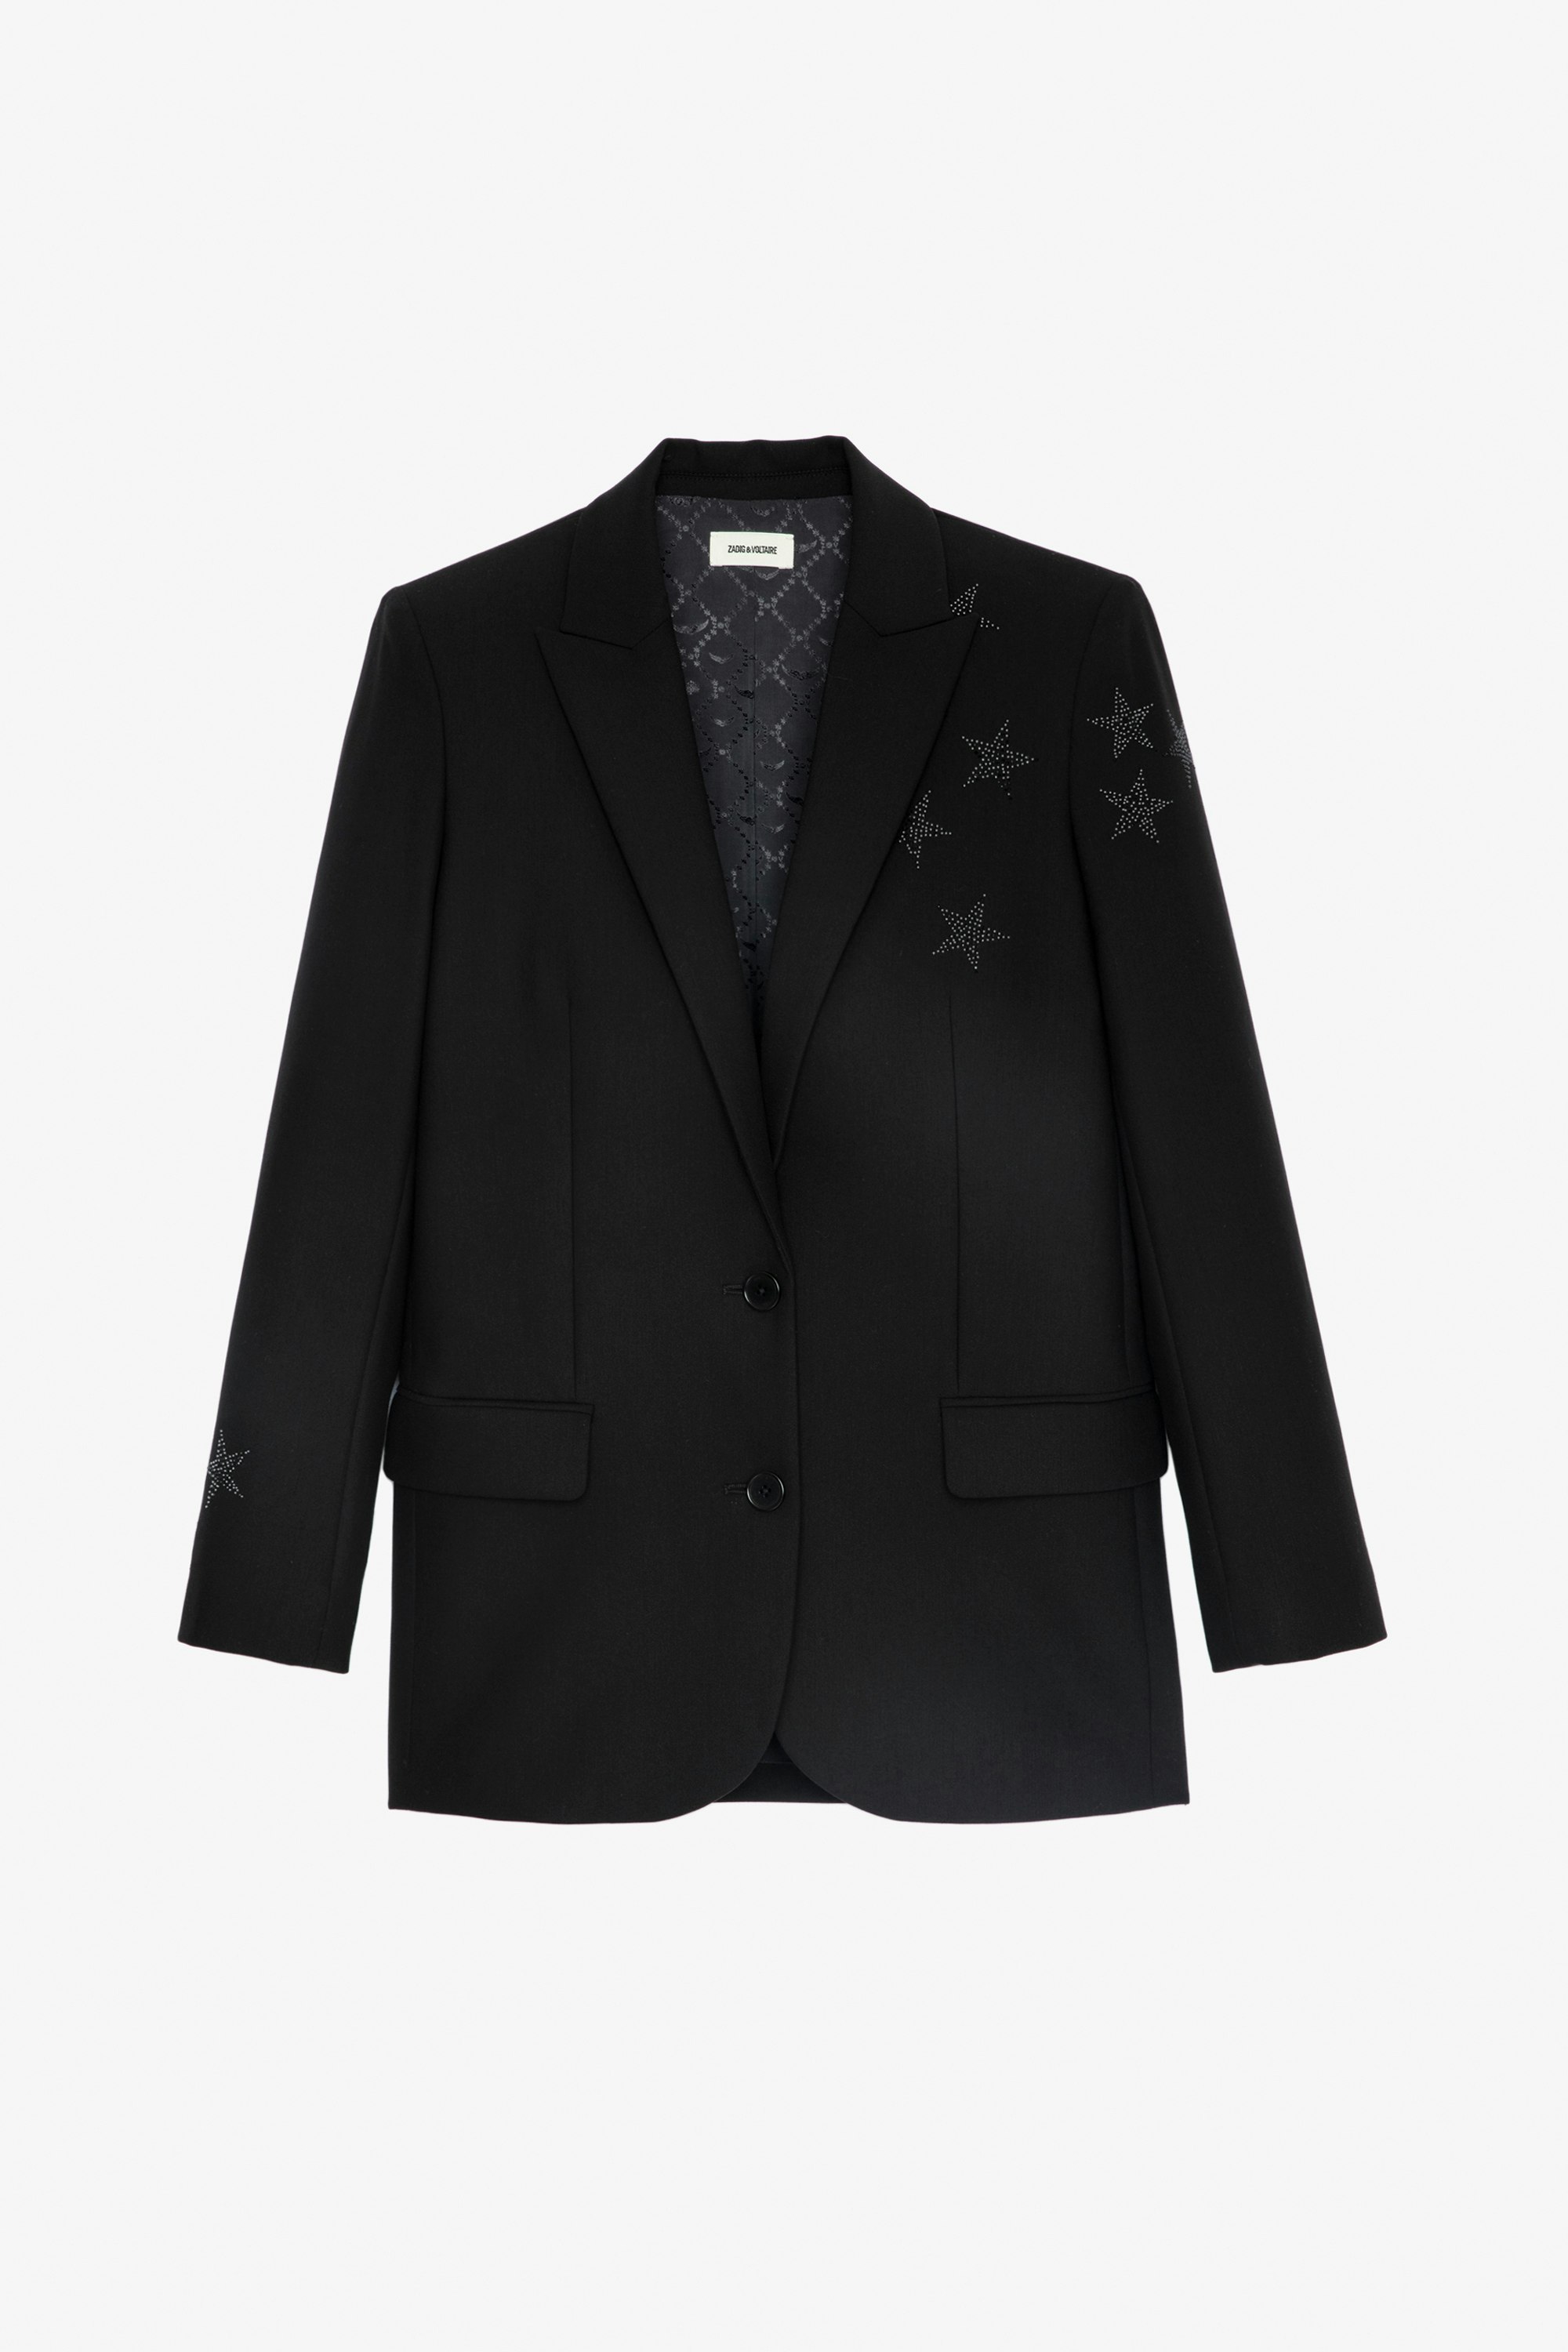 Viva Star ブレザー - Women’s black blazer with rhinestones